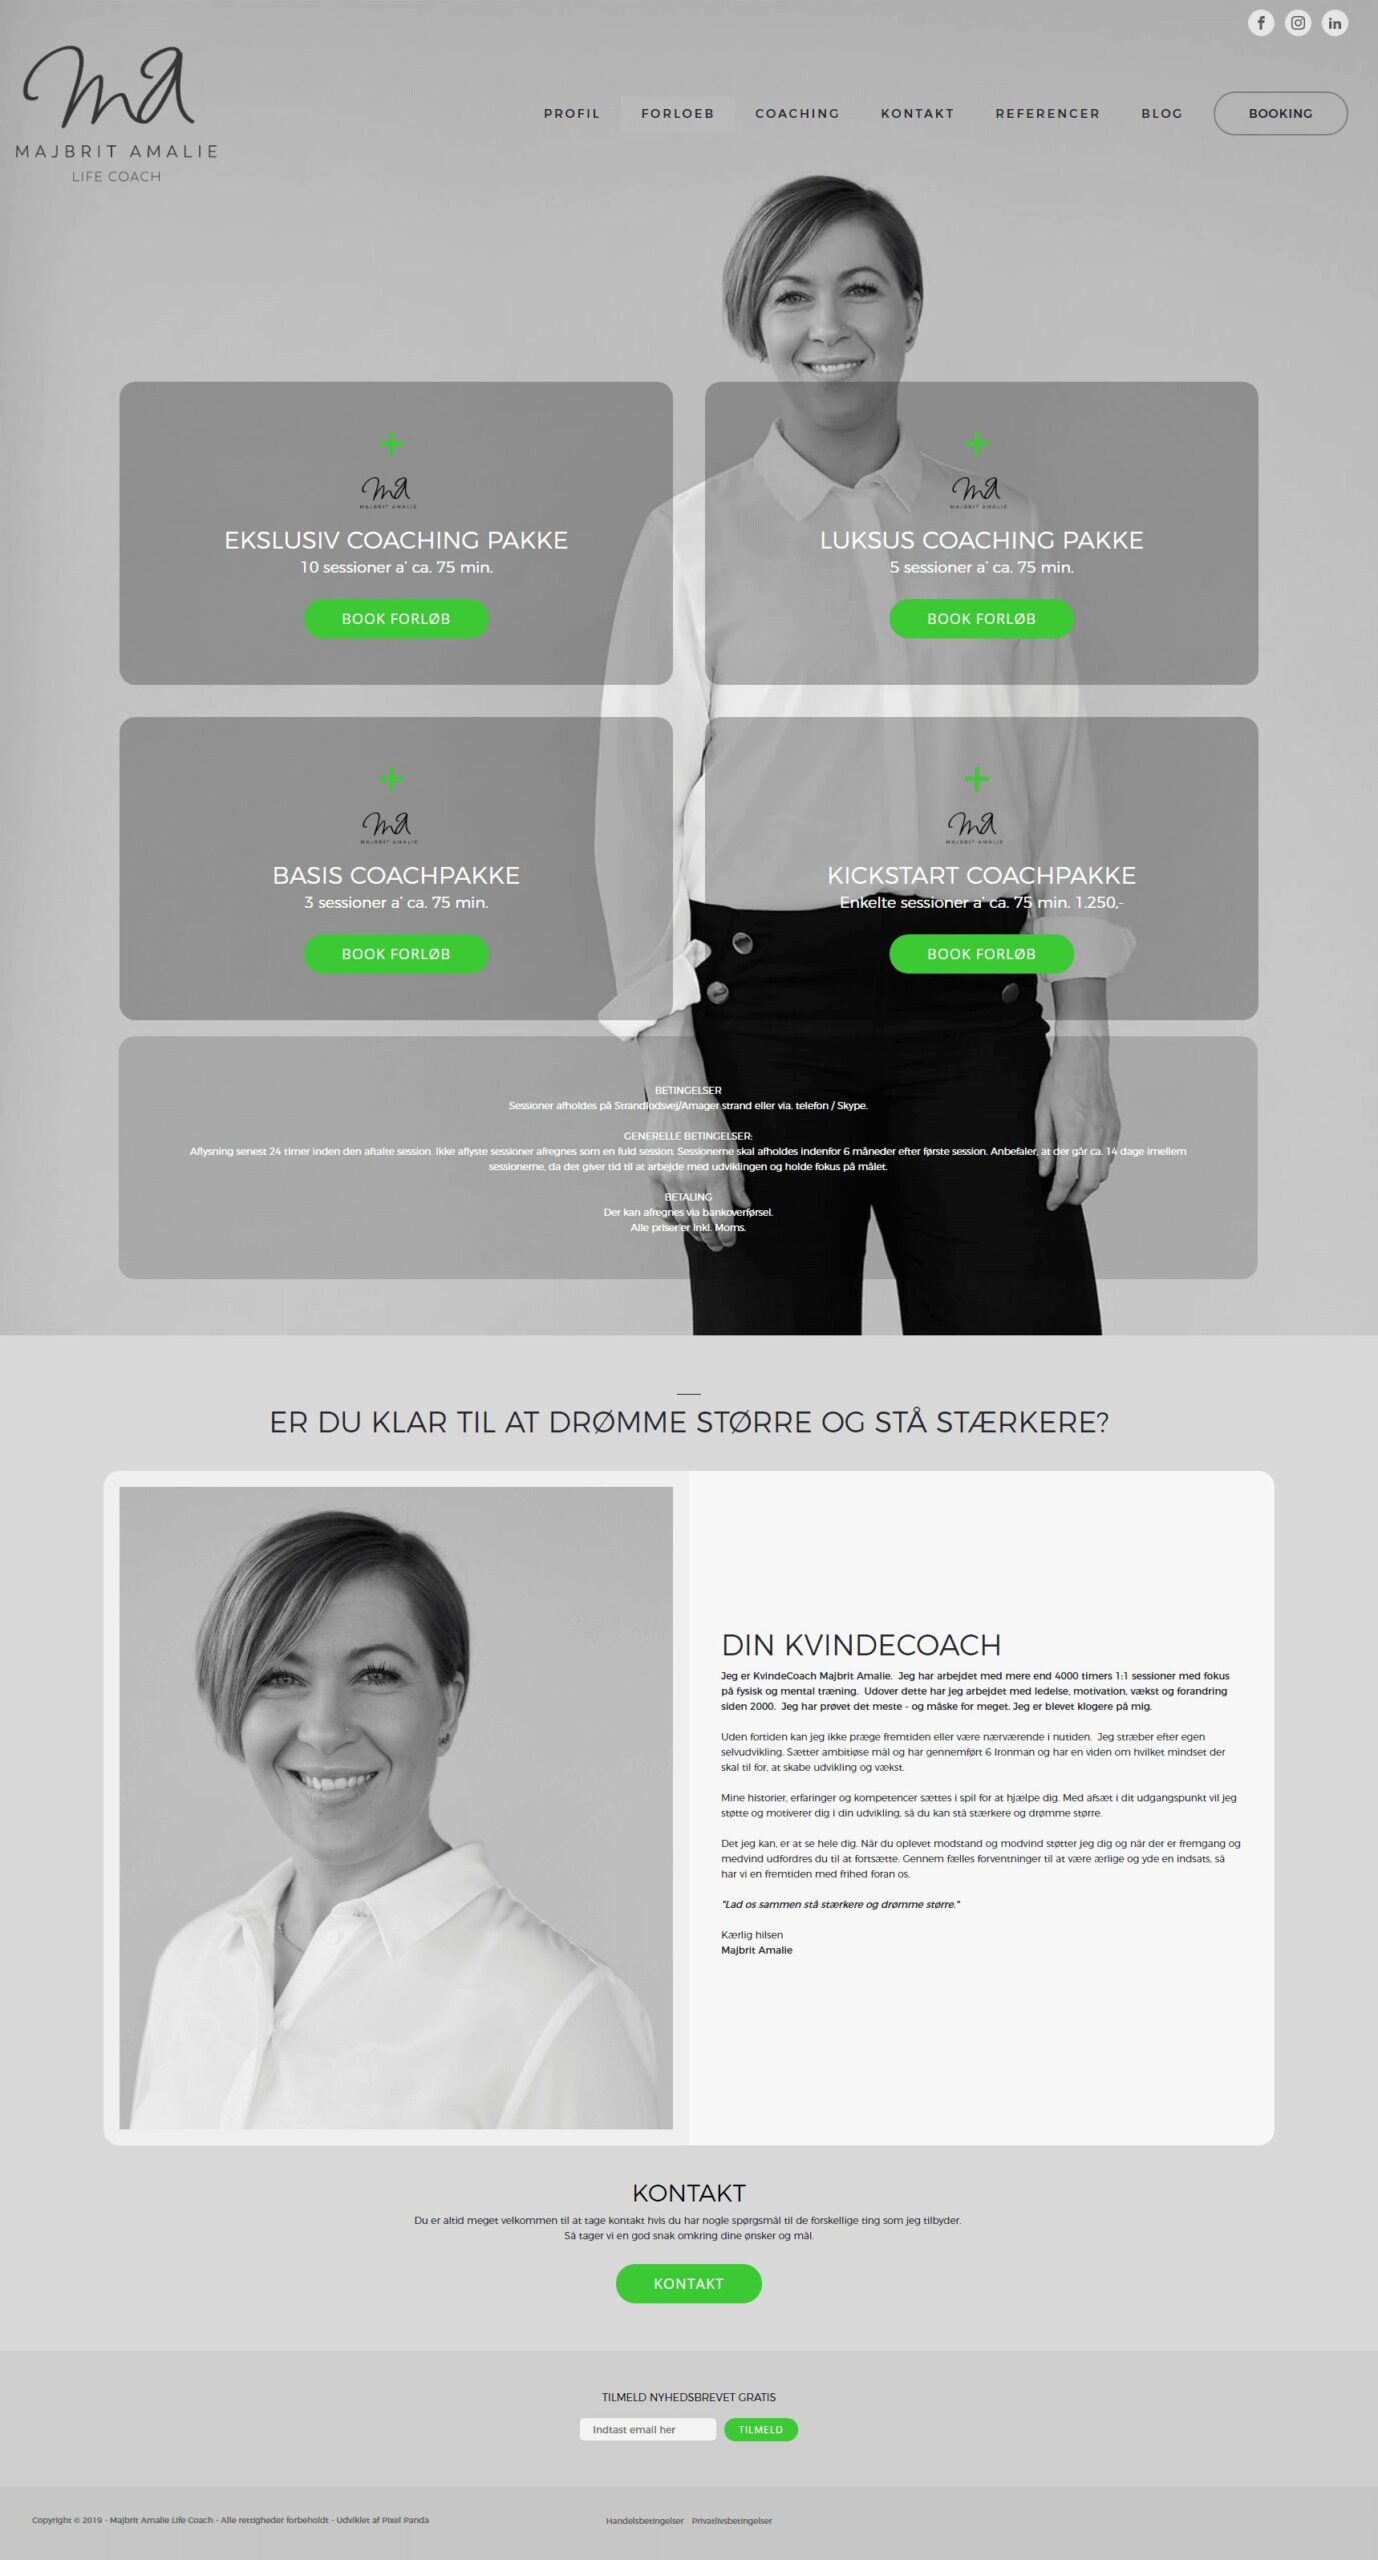 majbritamalie-webdesign